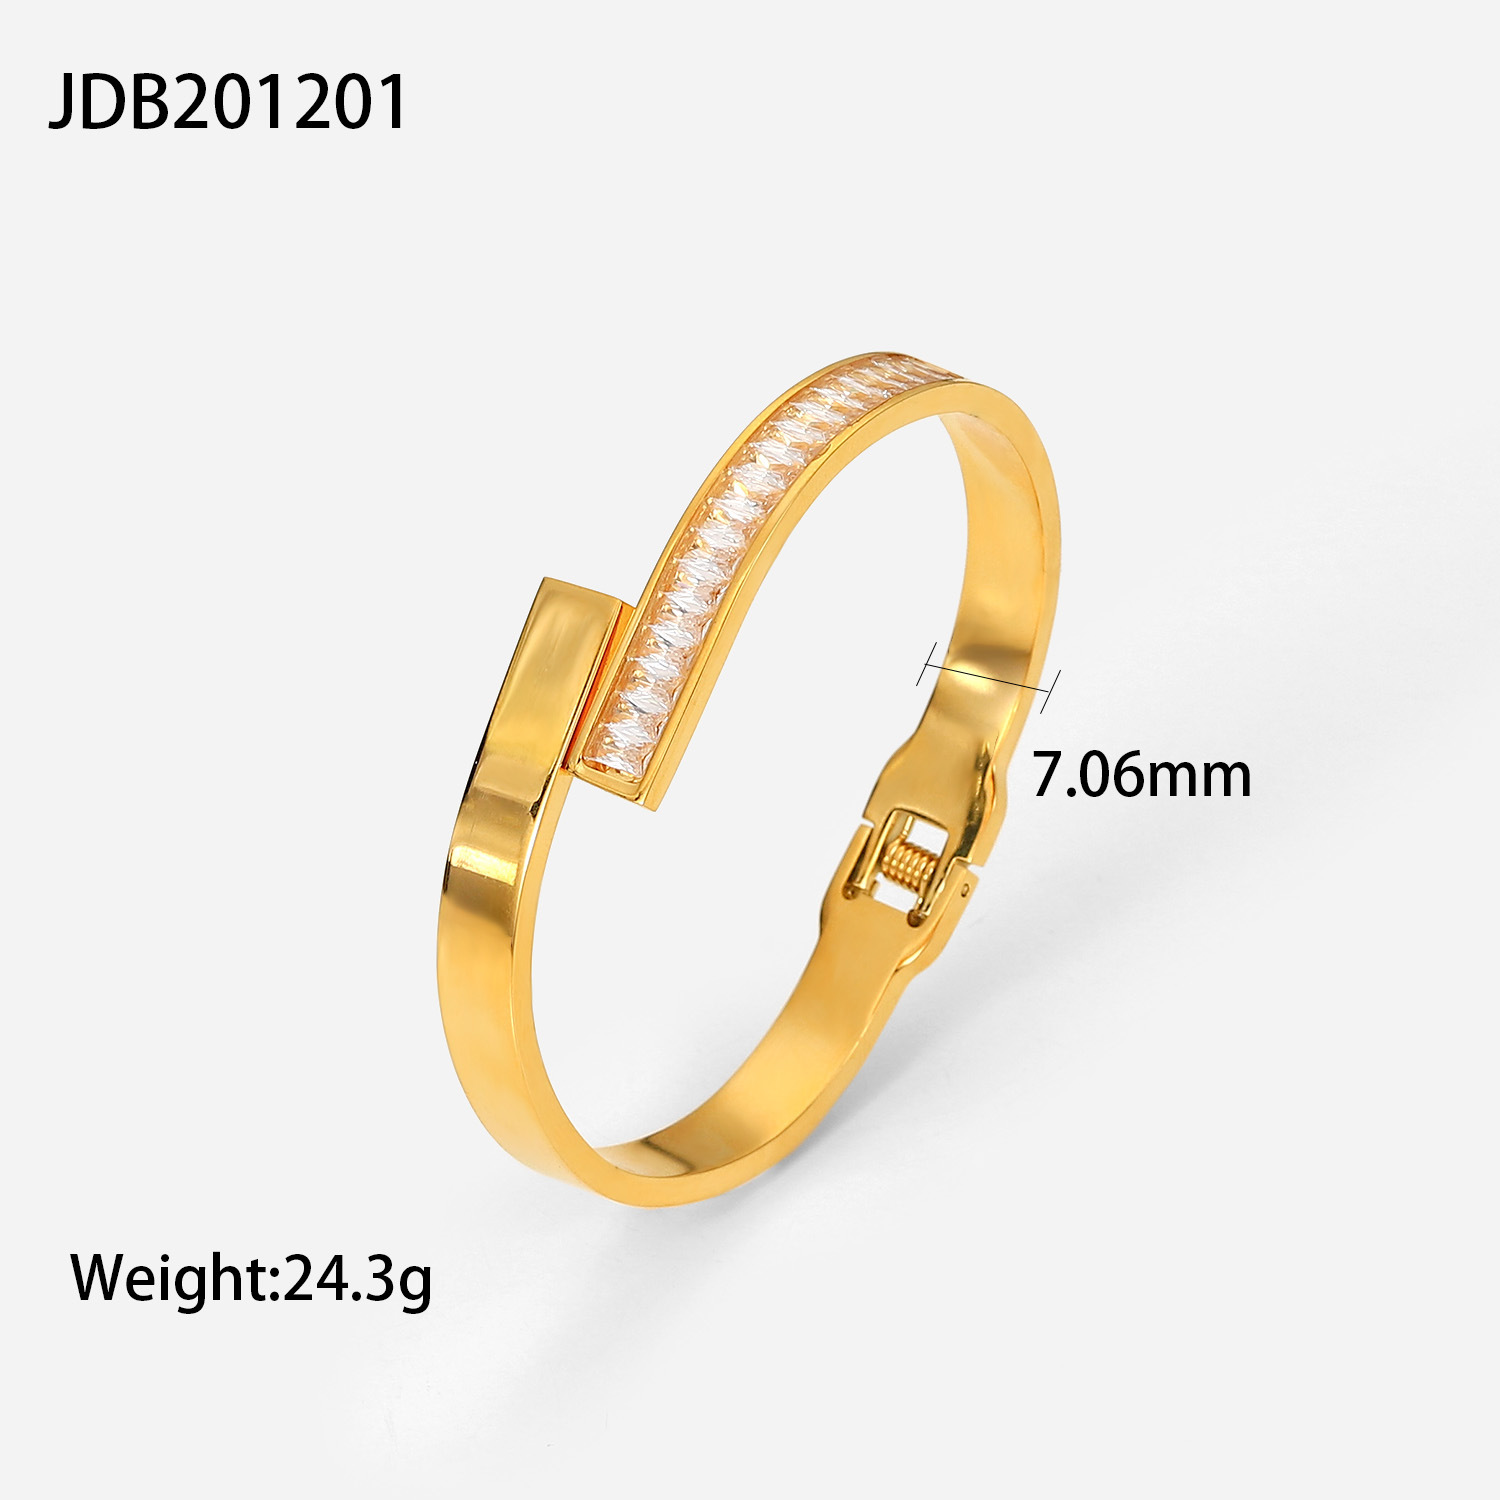 2:JDB201201  7.06mm